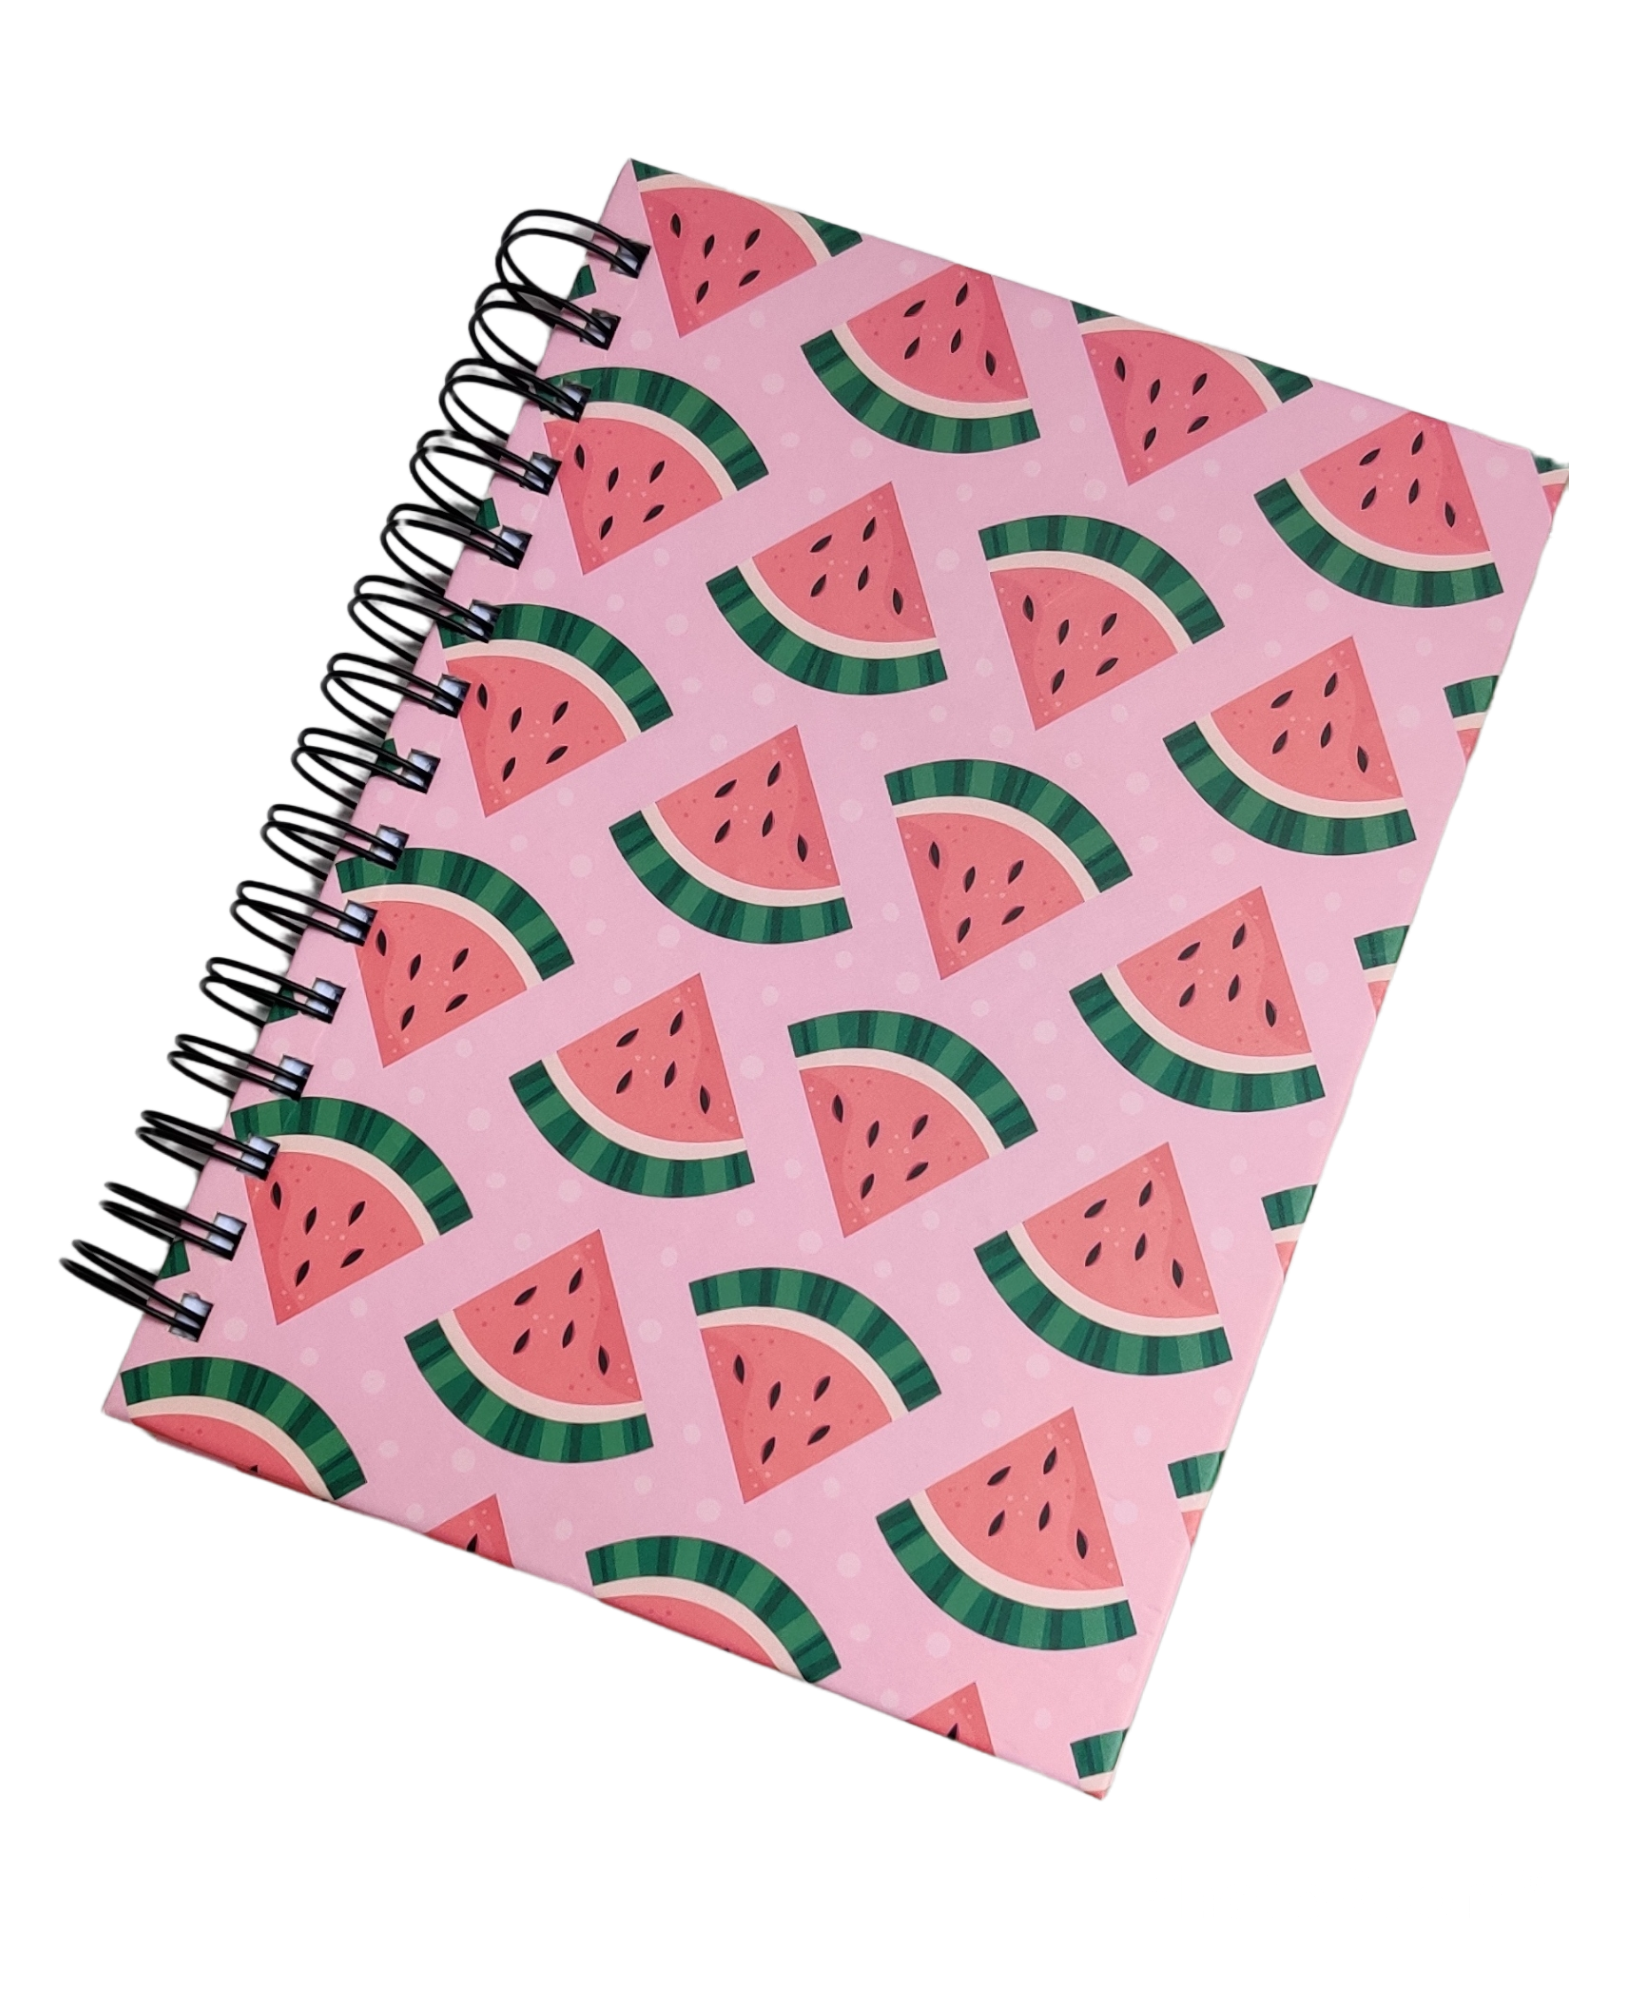 Watermelon Spiral Journal/Notepad - The Umbrella store